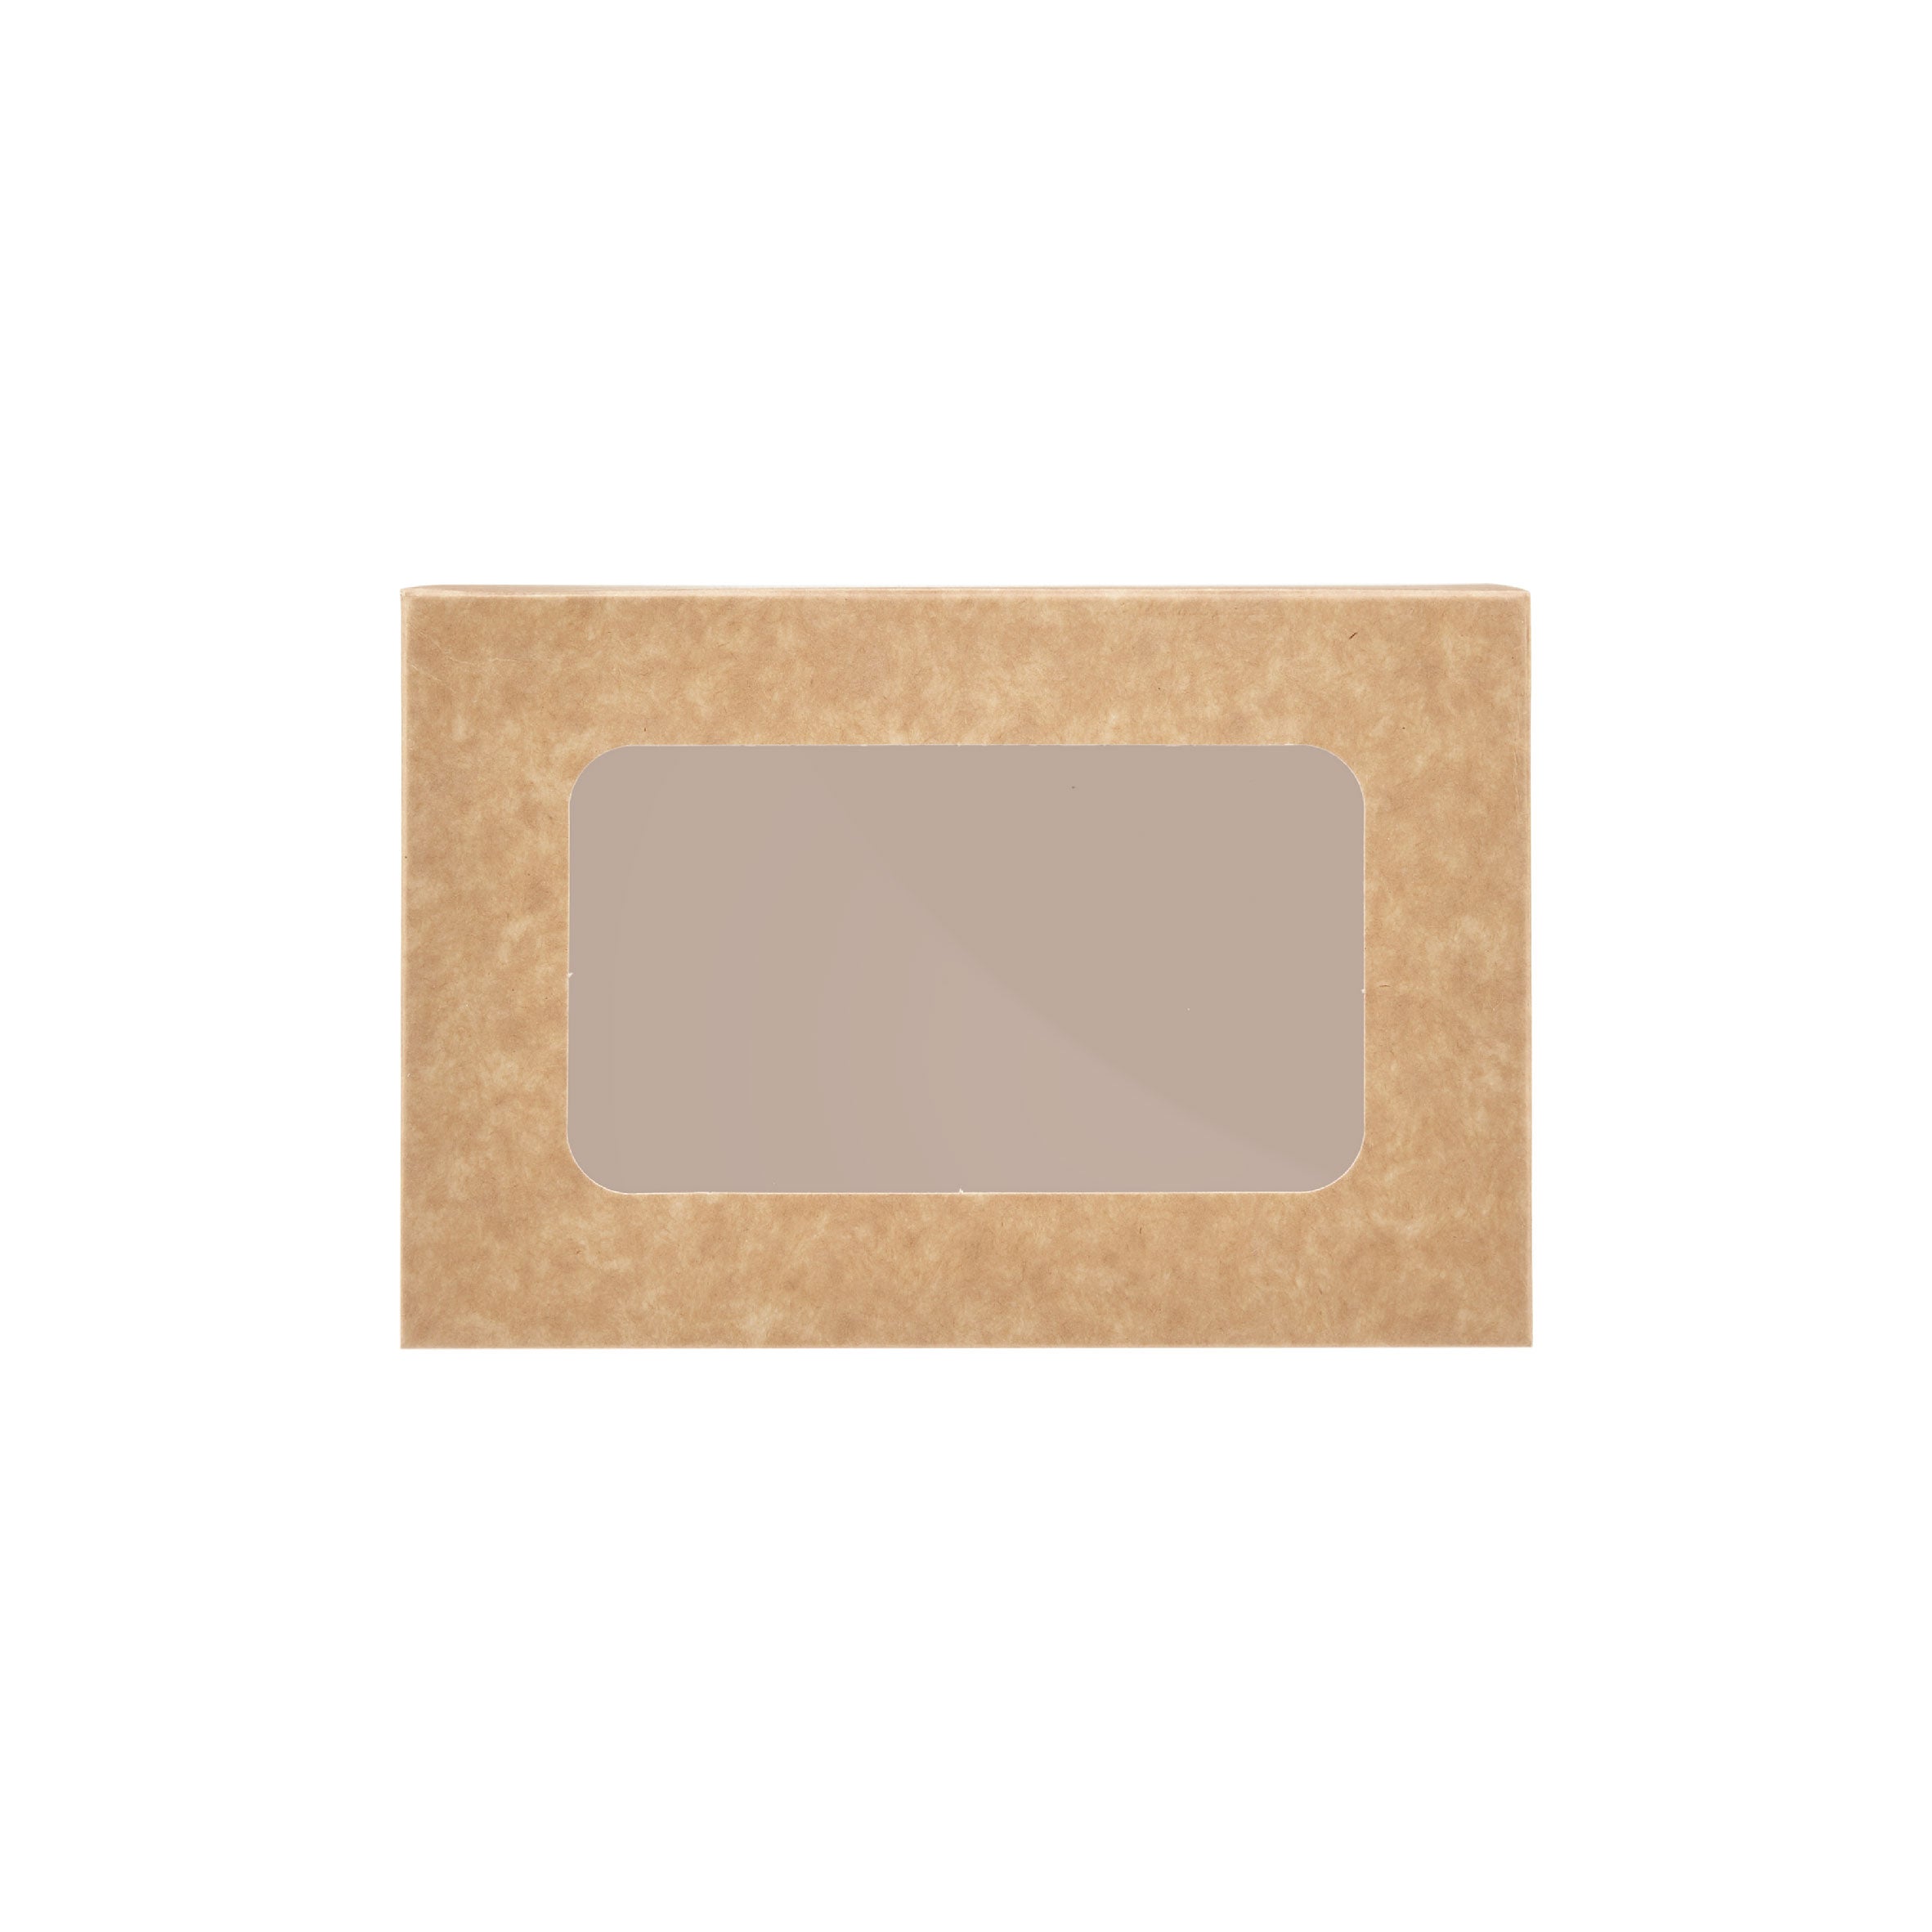 KRAFT RECTANGLE SALAD BOX 17 x 11 CM WITH WINDOW 250 Pieces - Hotpack UAE